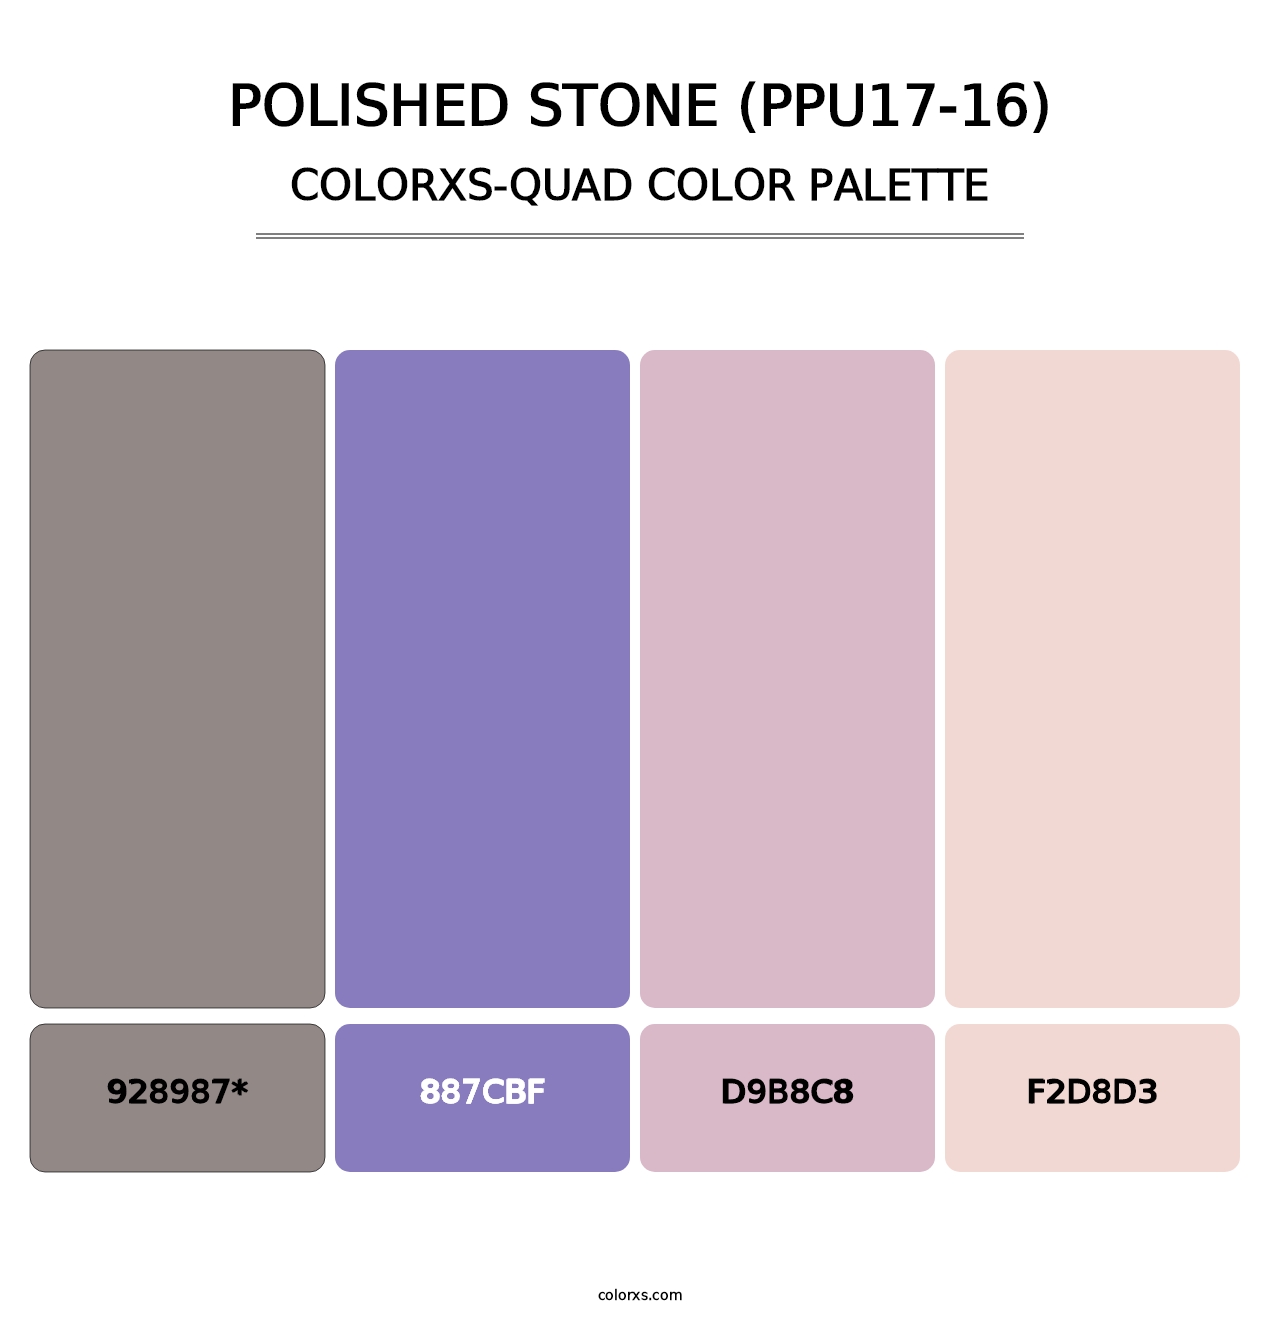 Polished Stone (PPU17-16) - Colorxs Quad Palette